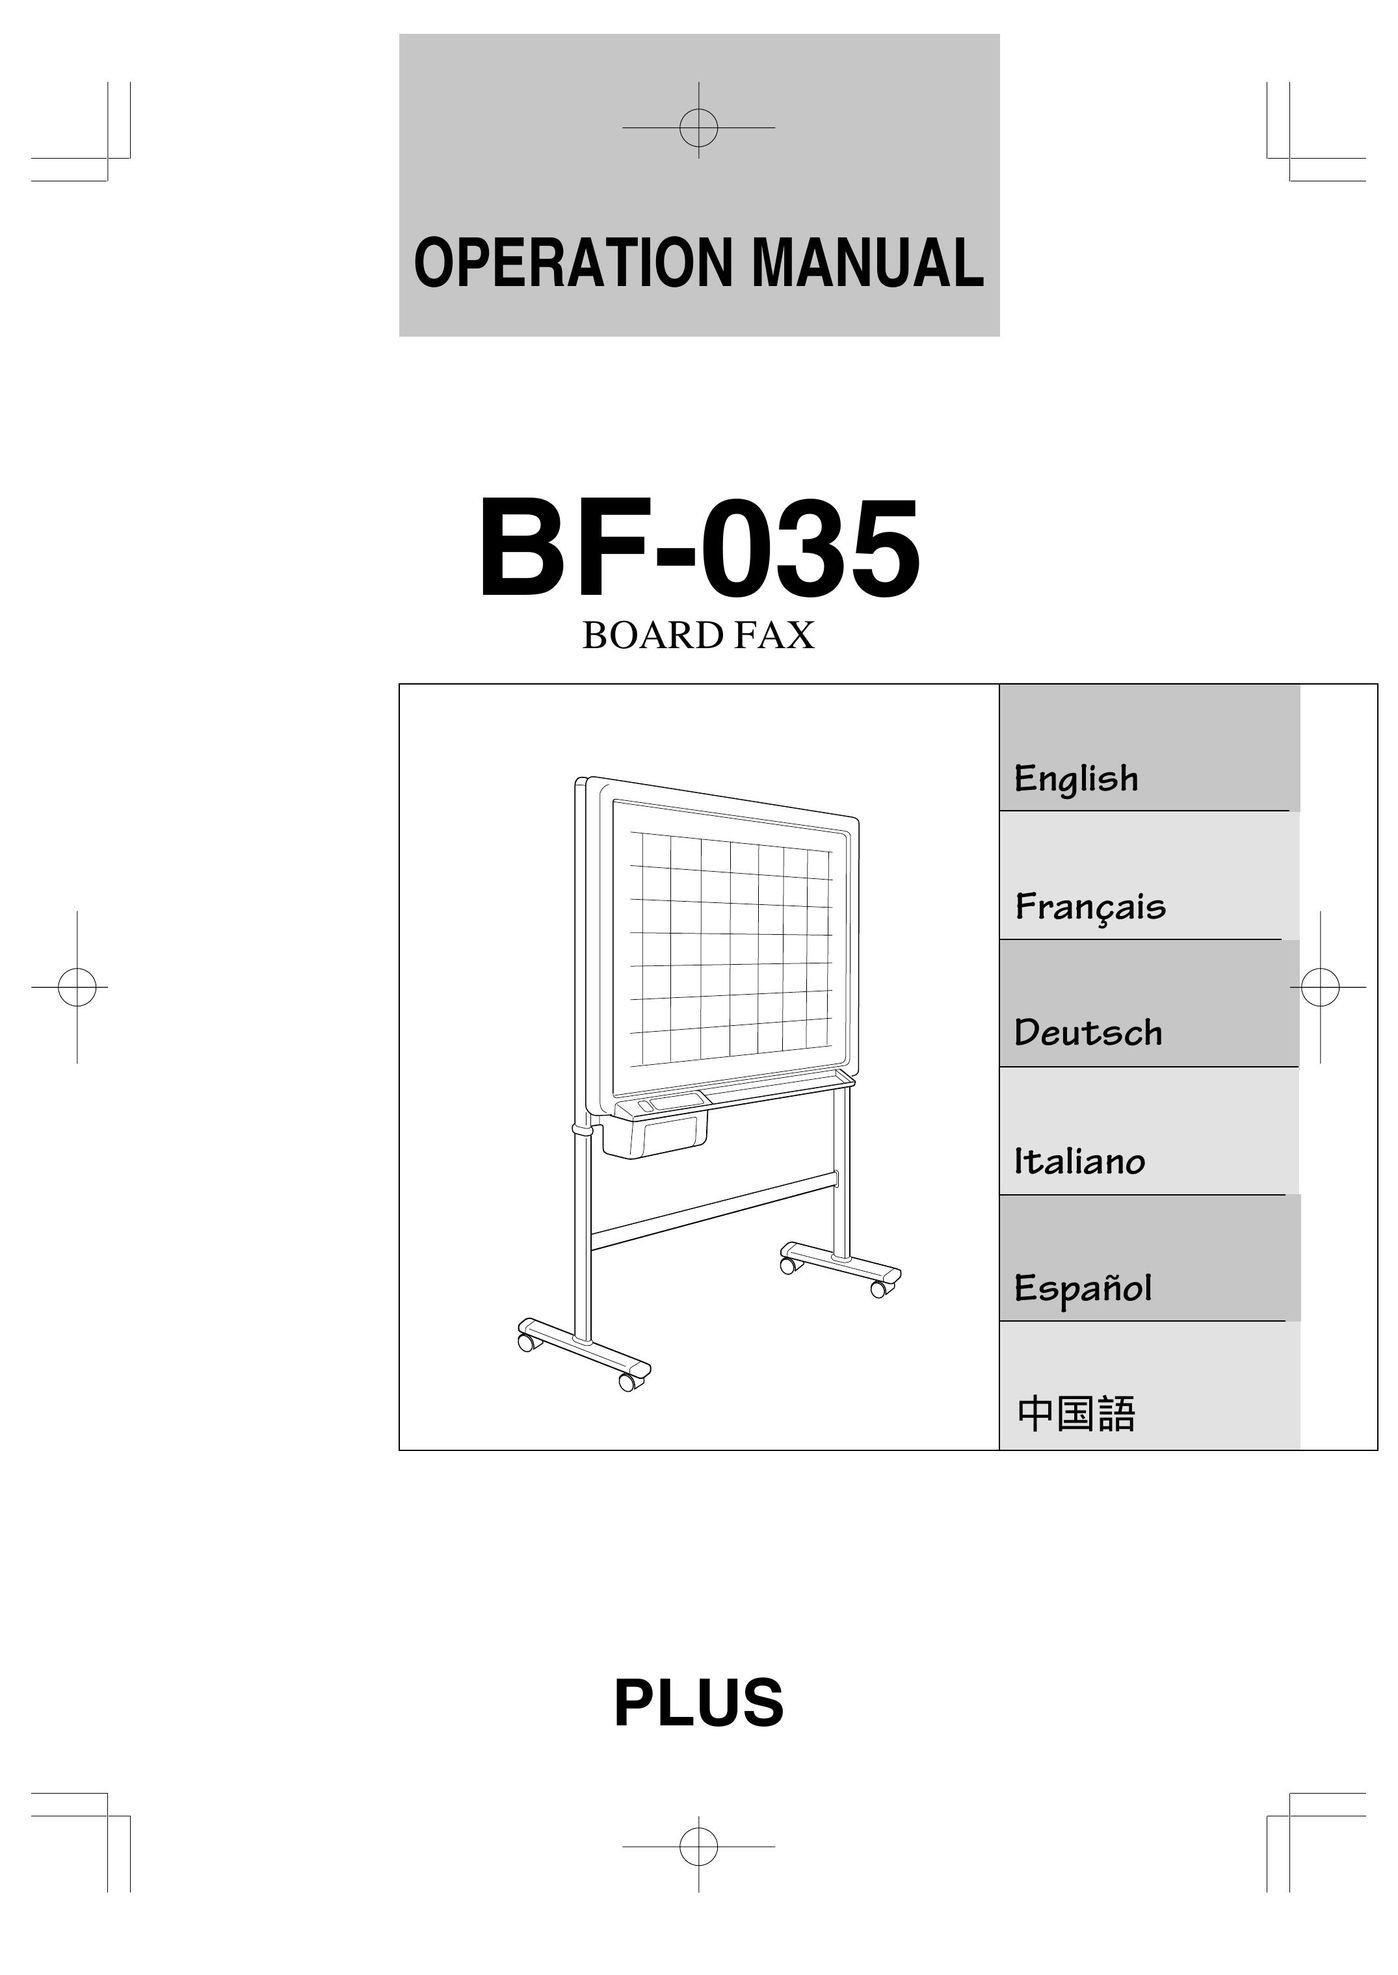 Plus BF-035 Fax Machine User Manual